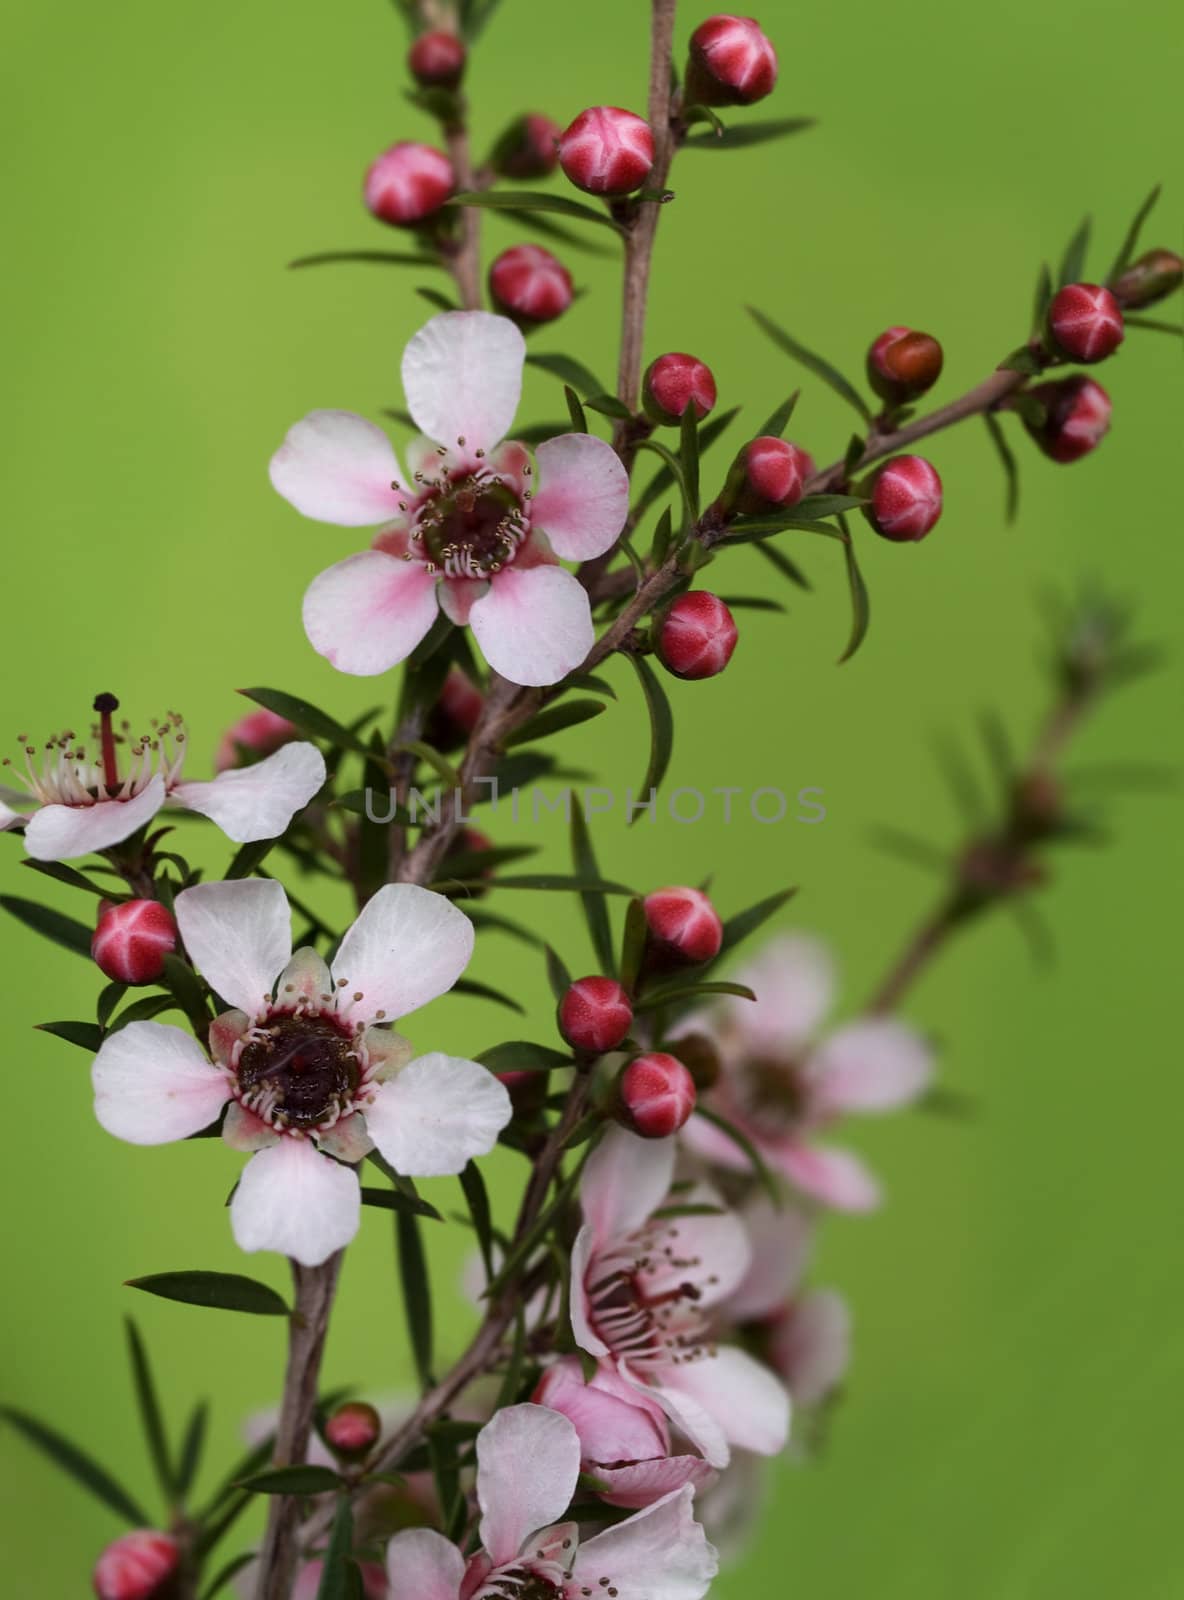 australian native spring flowers Leptospernum Pink Cascade with buds against green